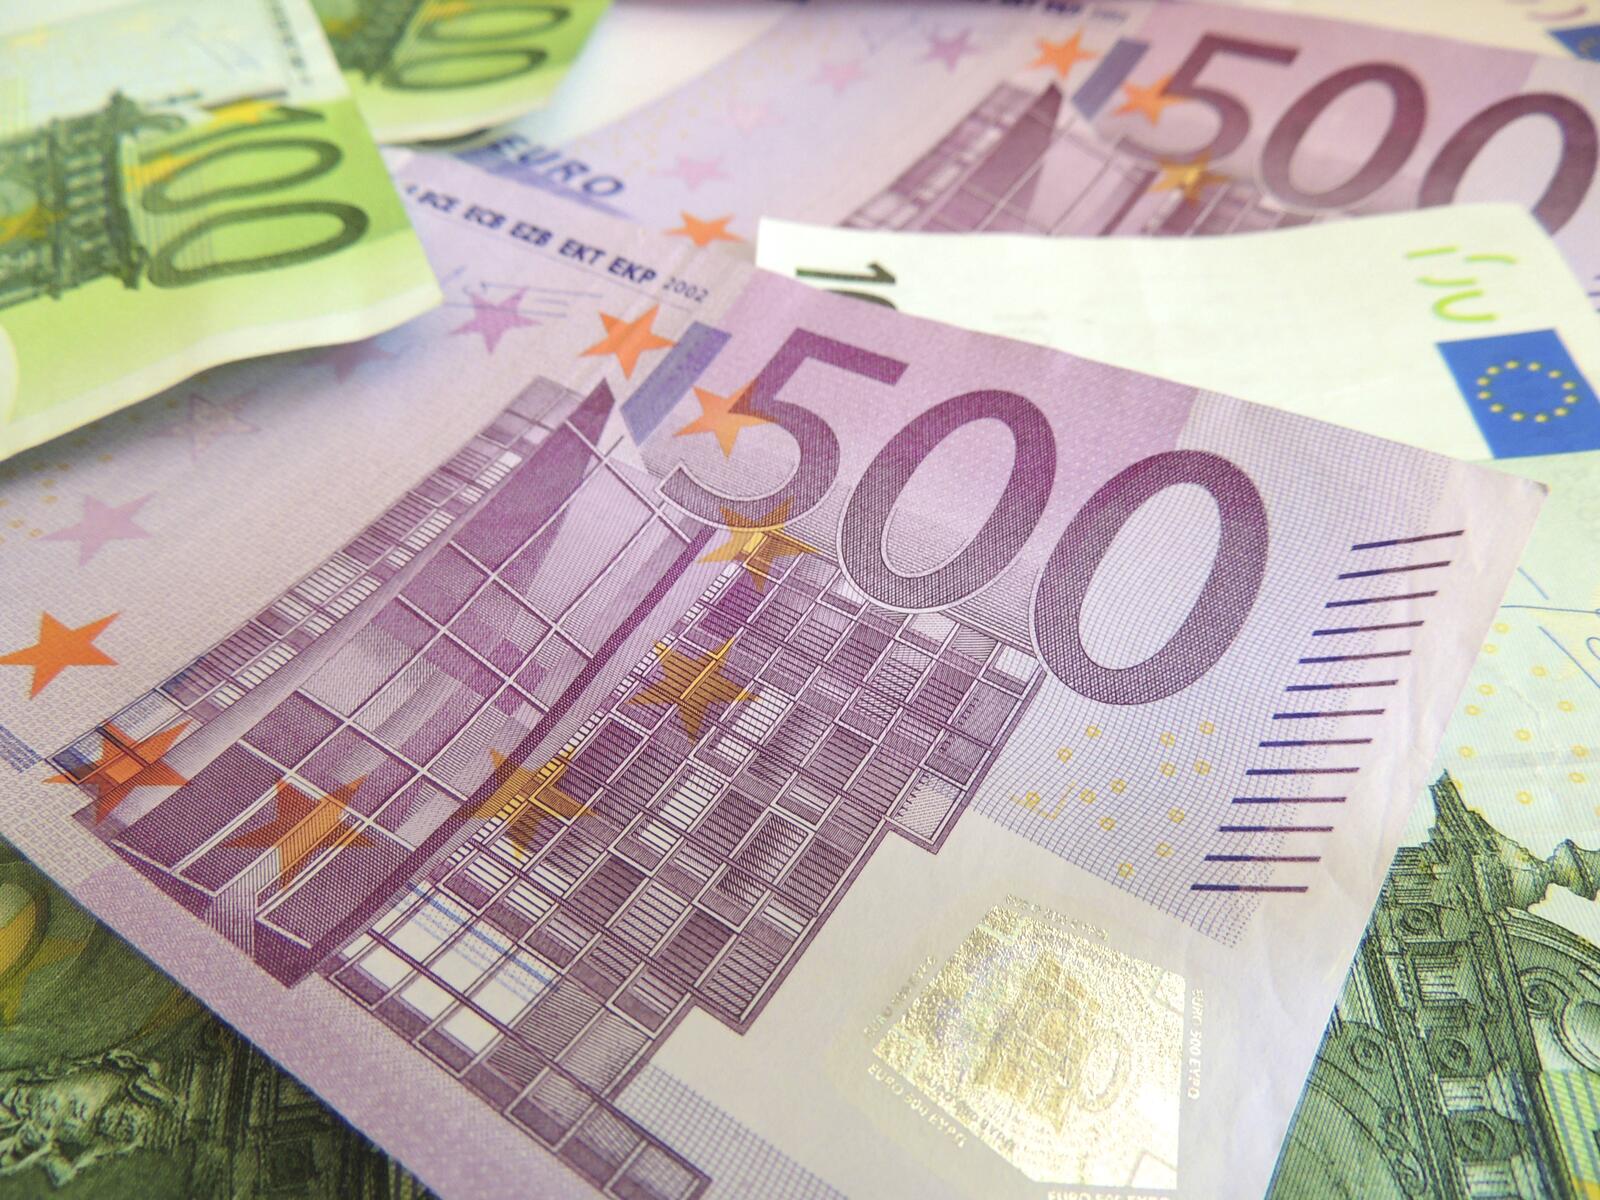 500 евро